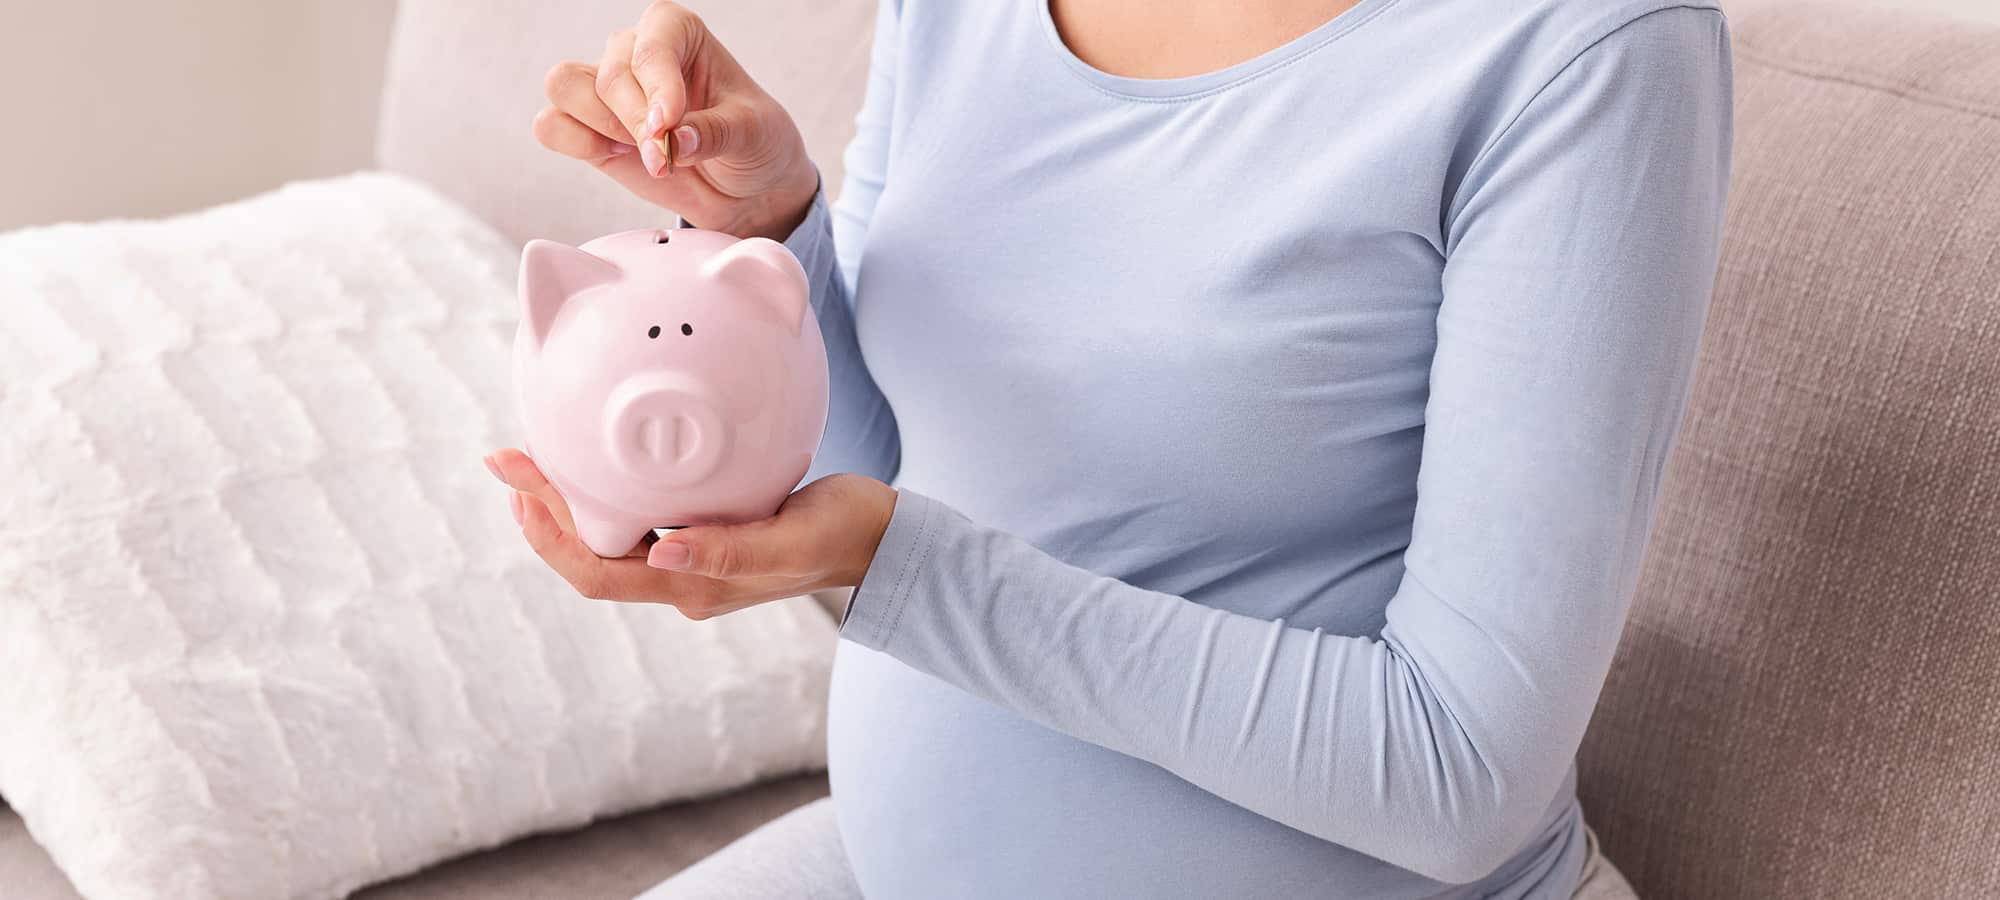 Financial Checks Before Having a Baby